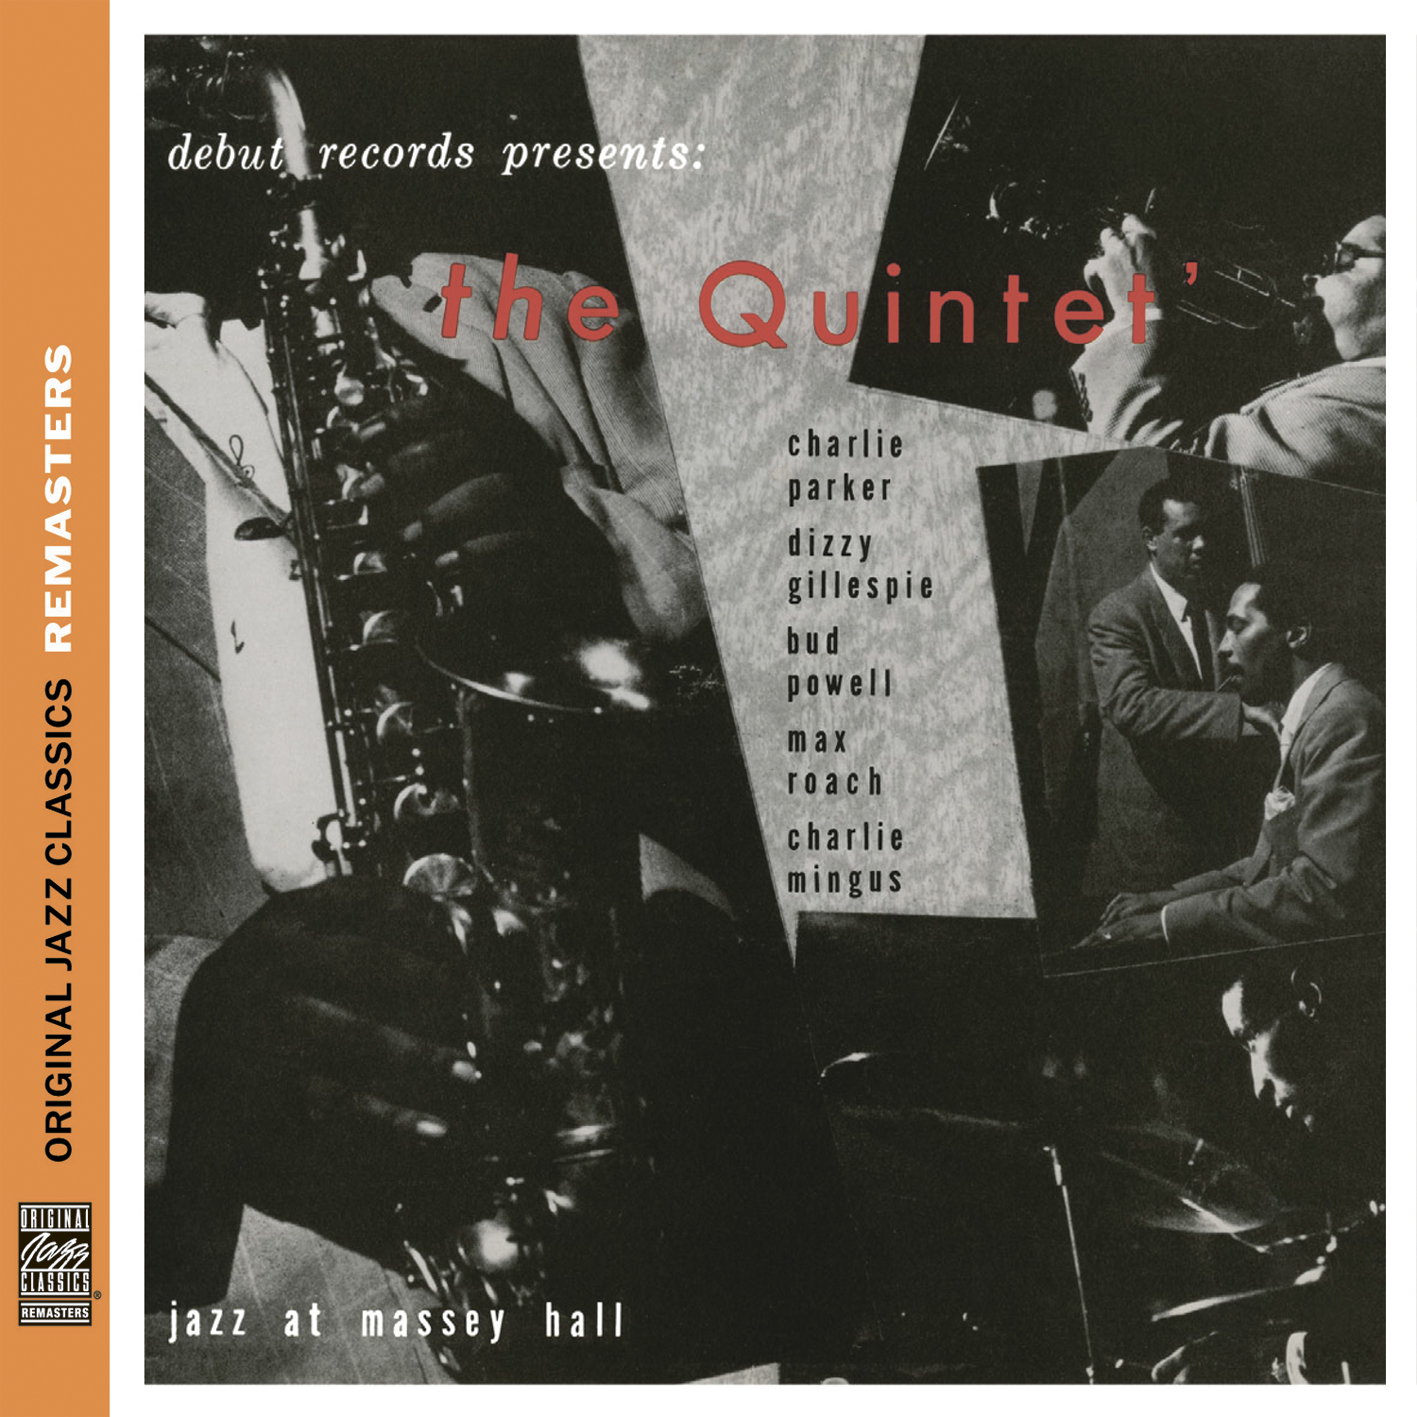 The Quintet: Jazz At Massey Hall [Original Jazz Classics Remasters] (1956/2012) [HDTracks FLAC 24bit/192kHz]